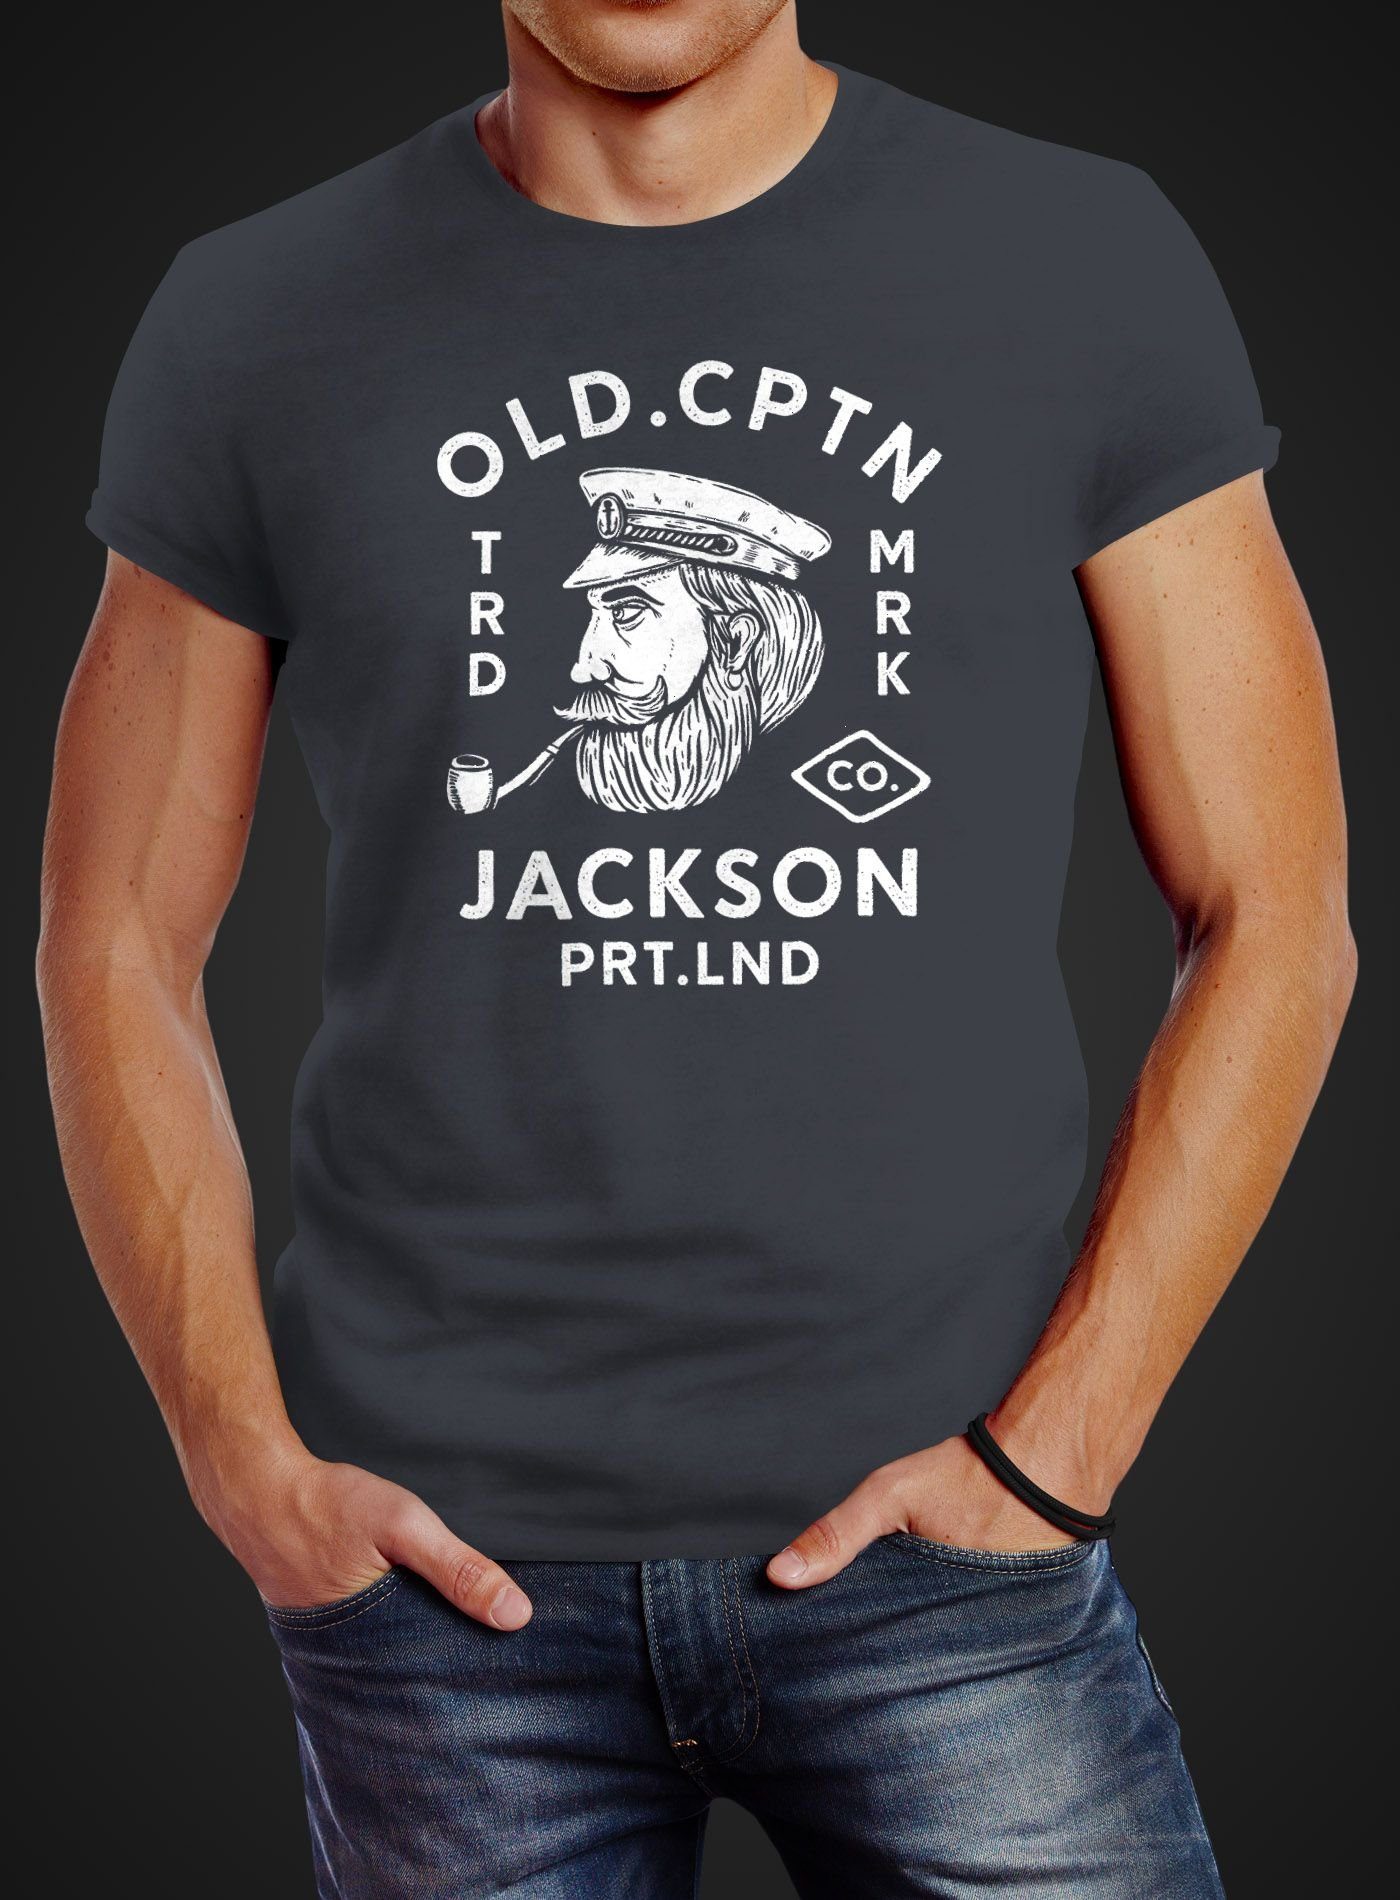 Kapitän Neverless® Print Herren Print-Shirt Neverless Motiv Cptn Retro Aufdruck grau mit Jackson Old Print-Shirt T-Shirt